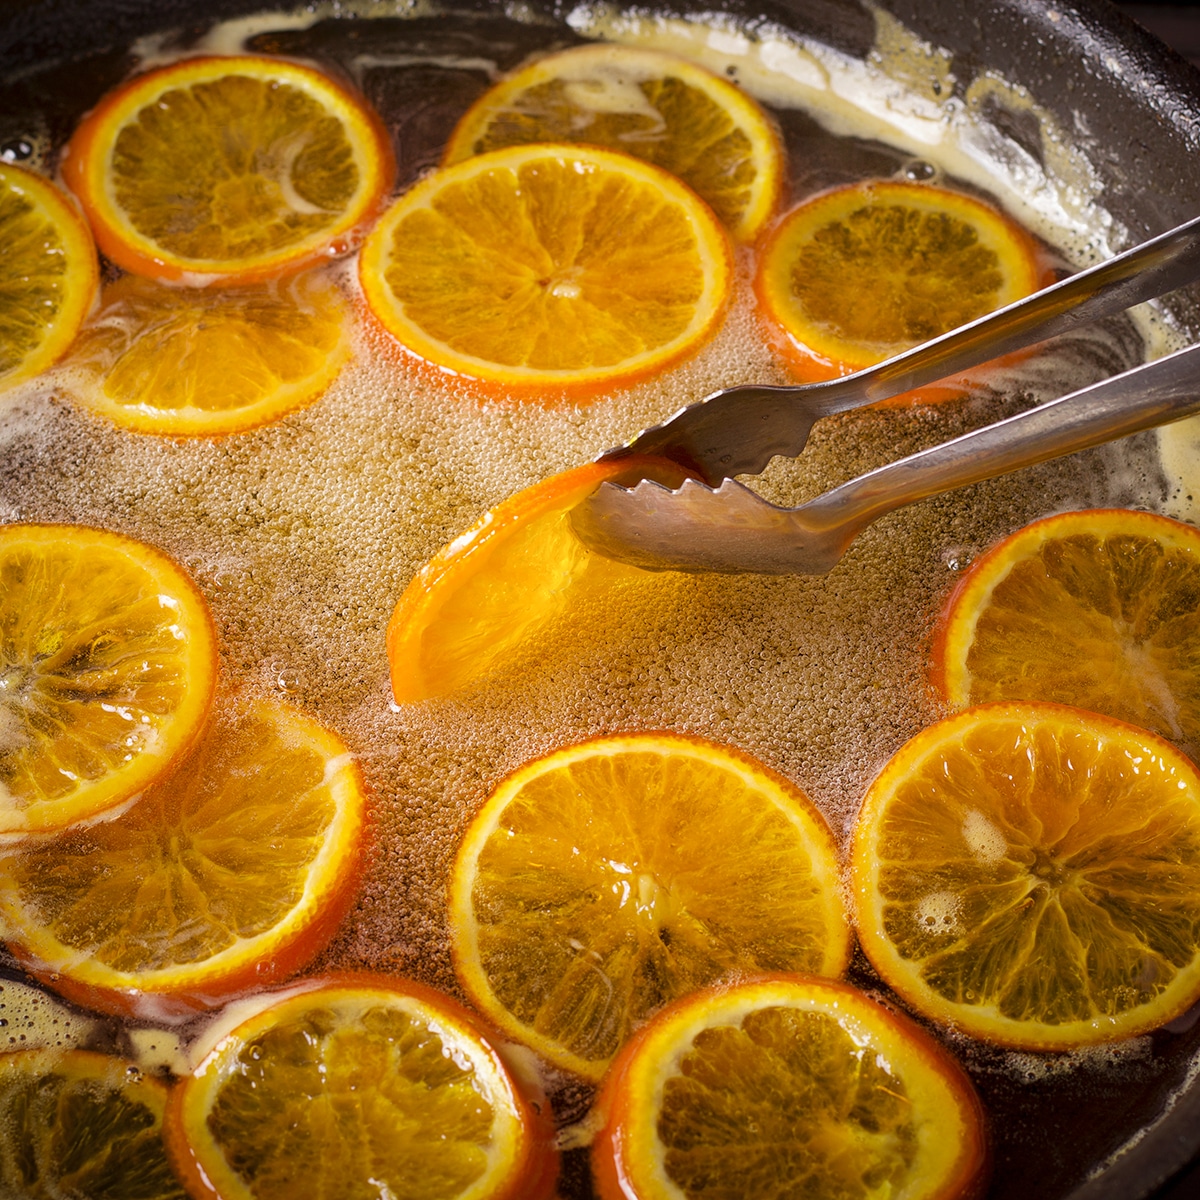 Using metal tongs to turn orange slices in simmering simple syrup.